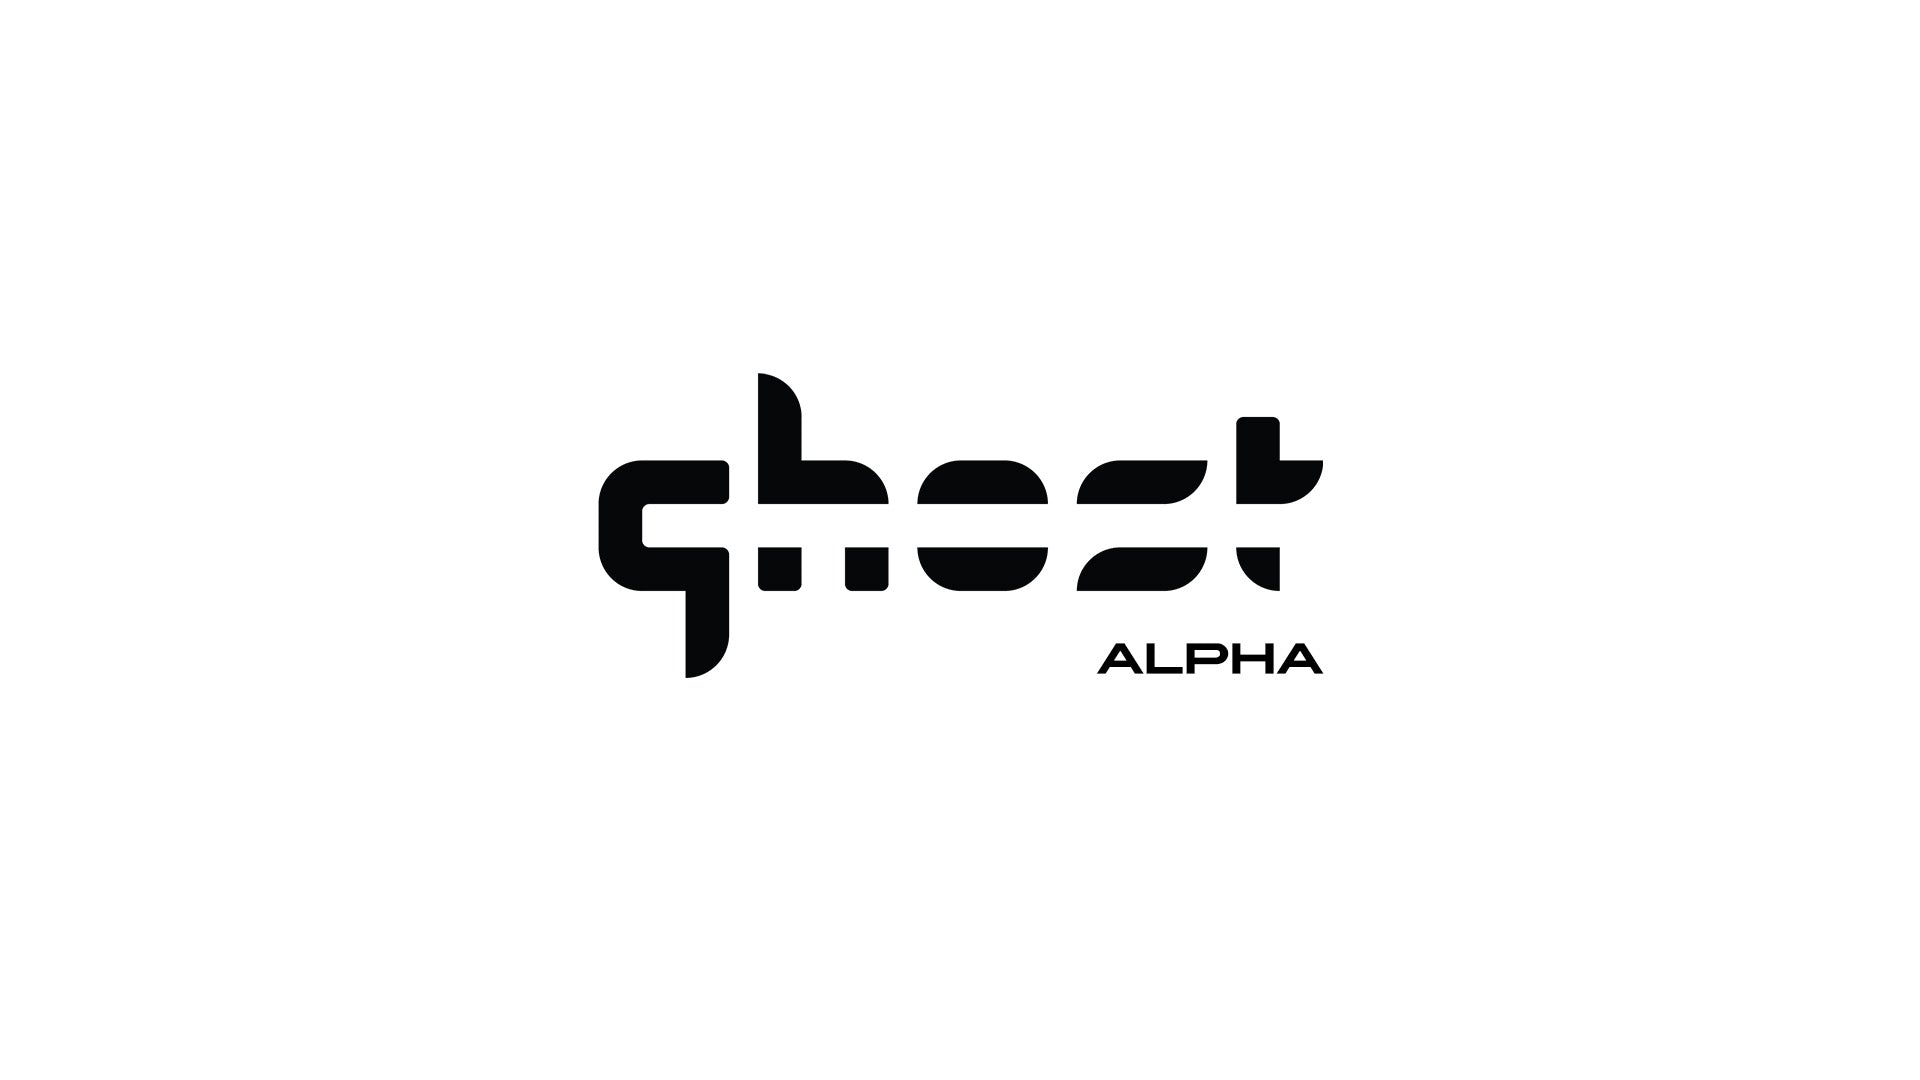 Ghost Alpha